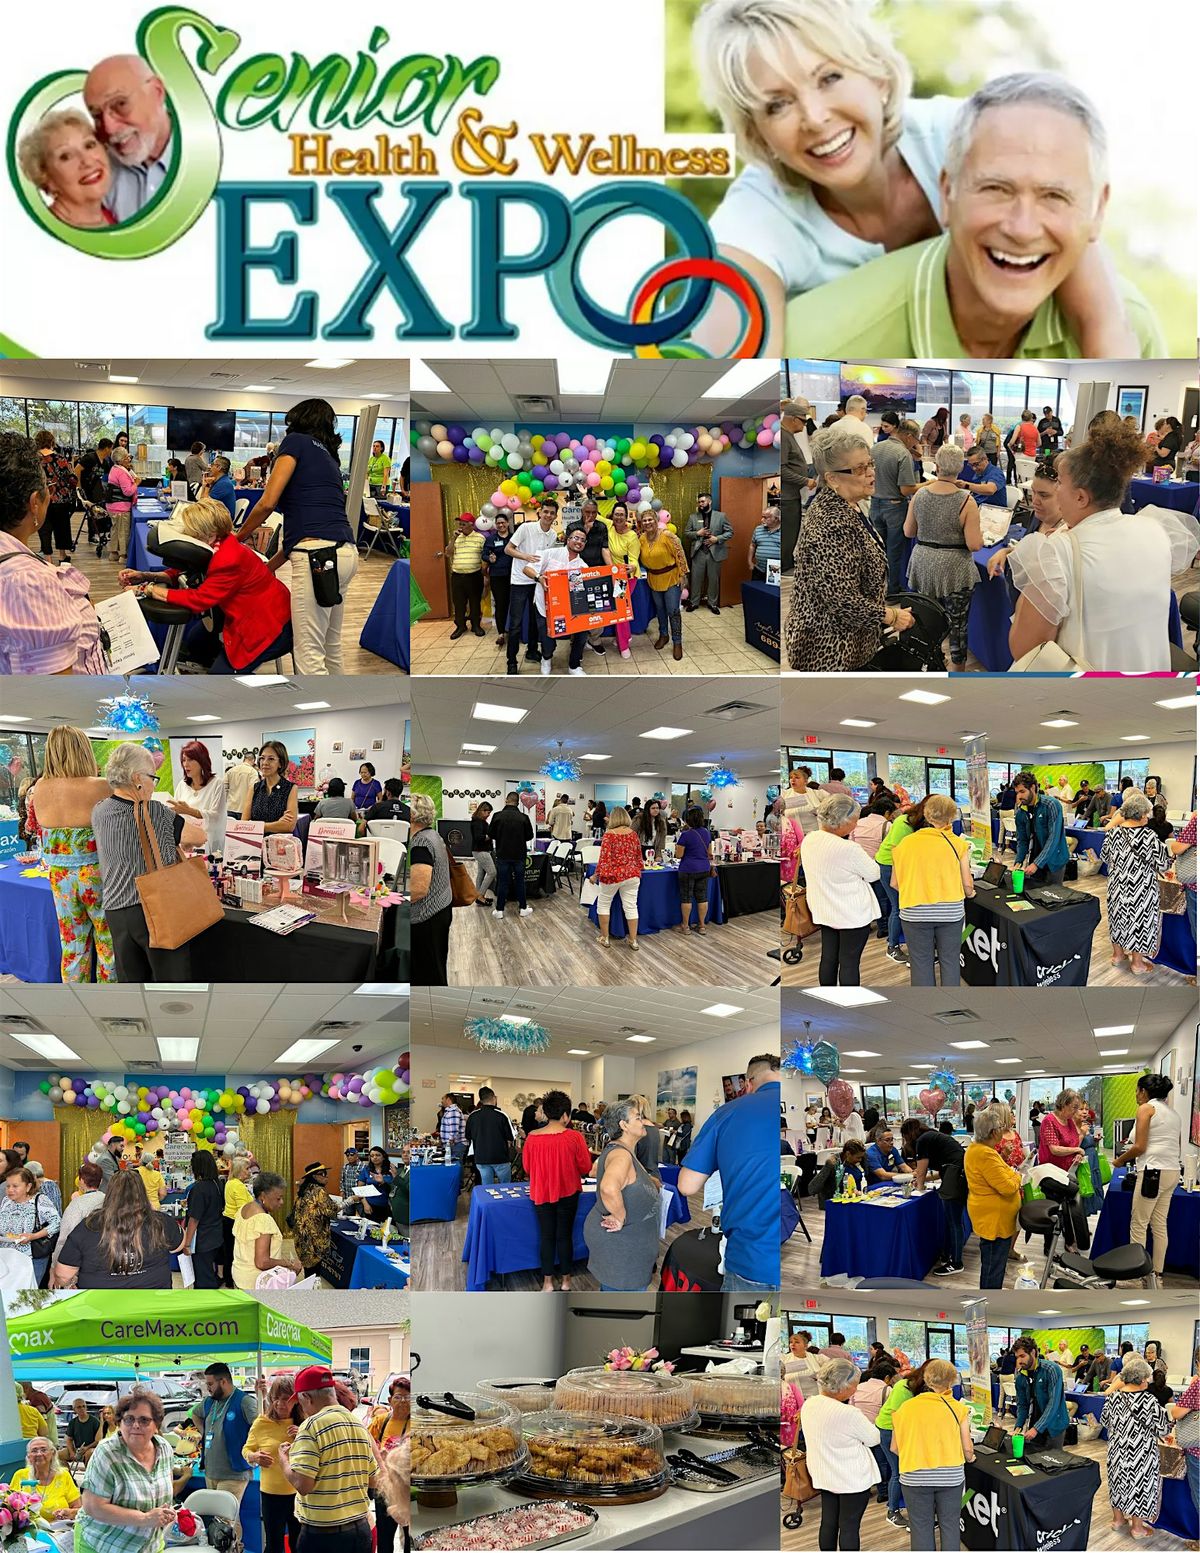 Level UP Health & Wellness Senior Expo West Orlando - Attendee Registration